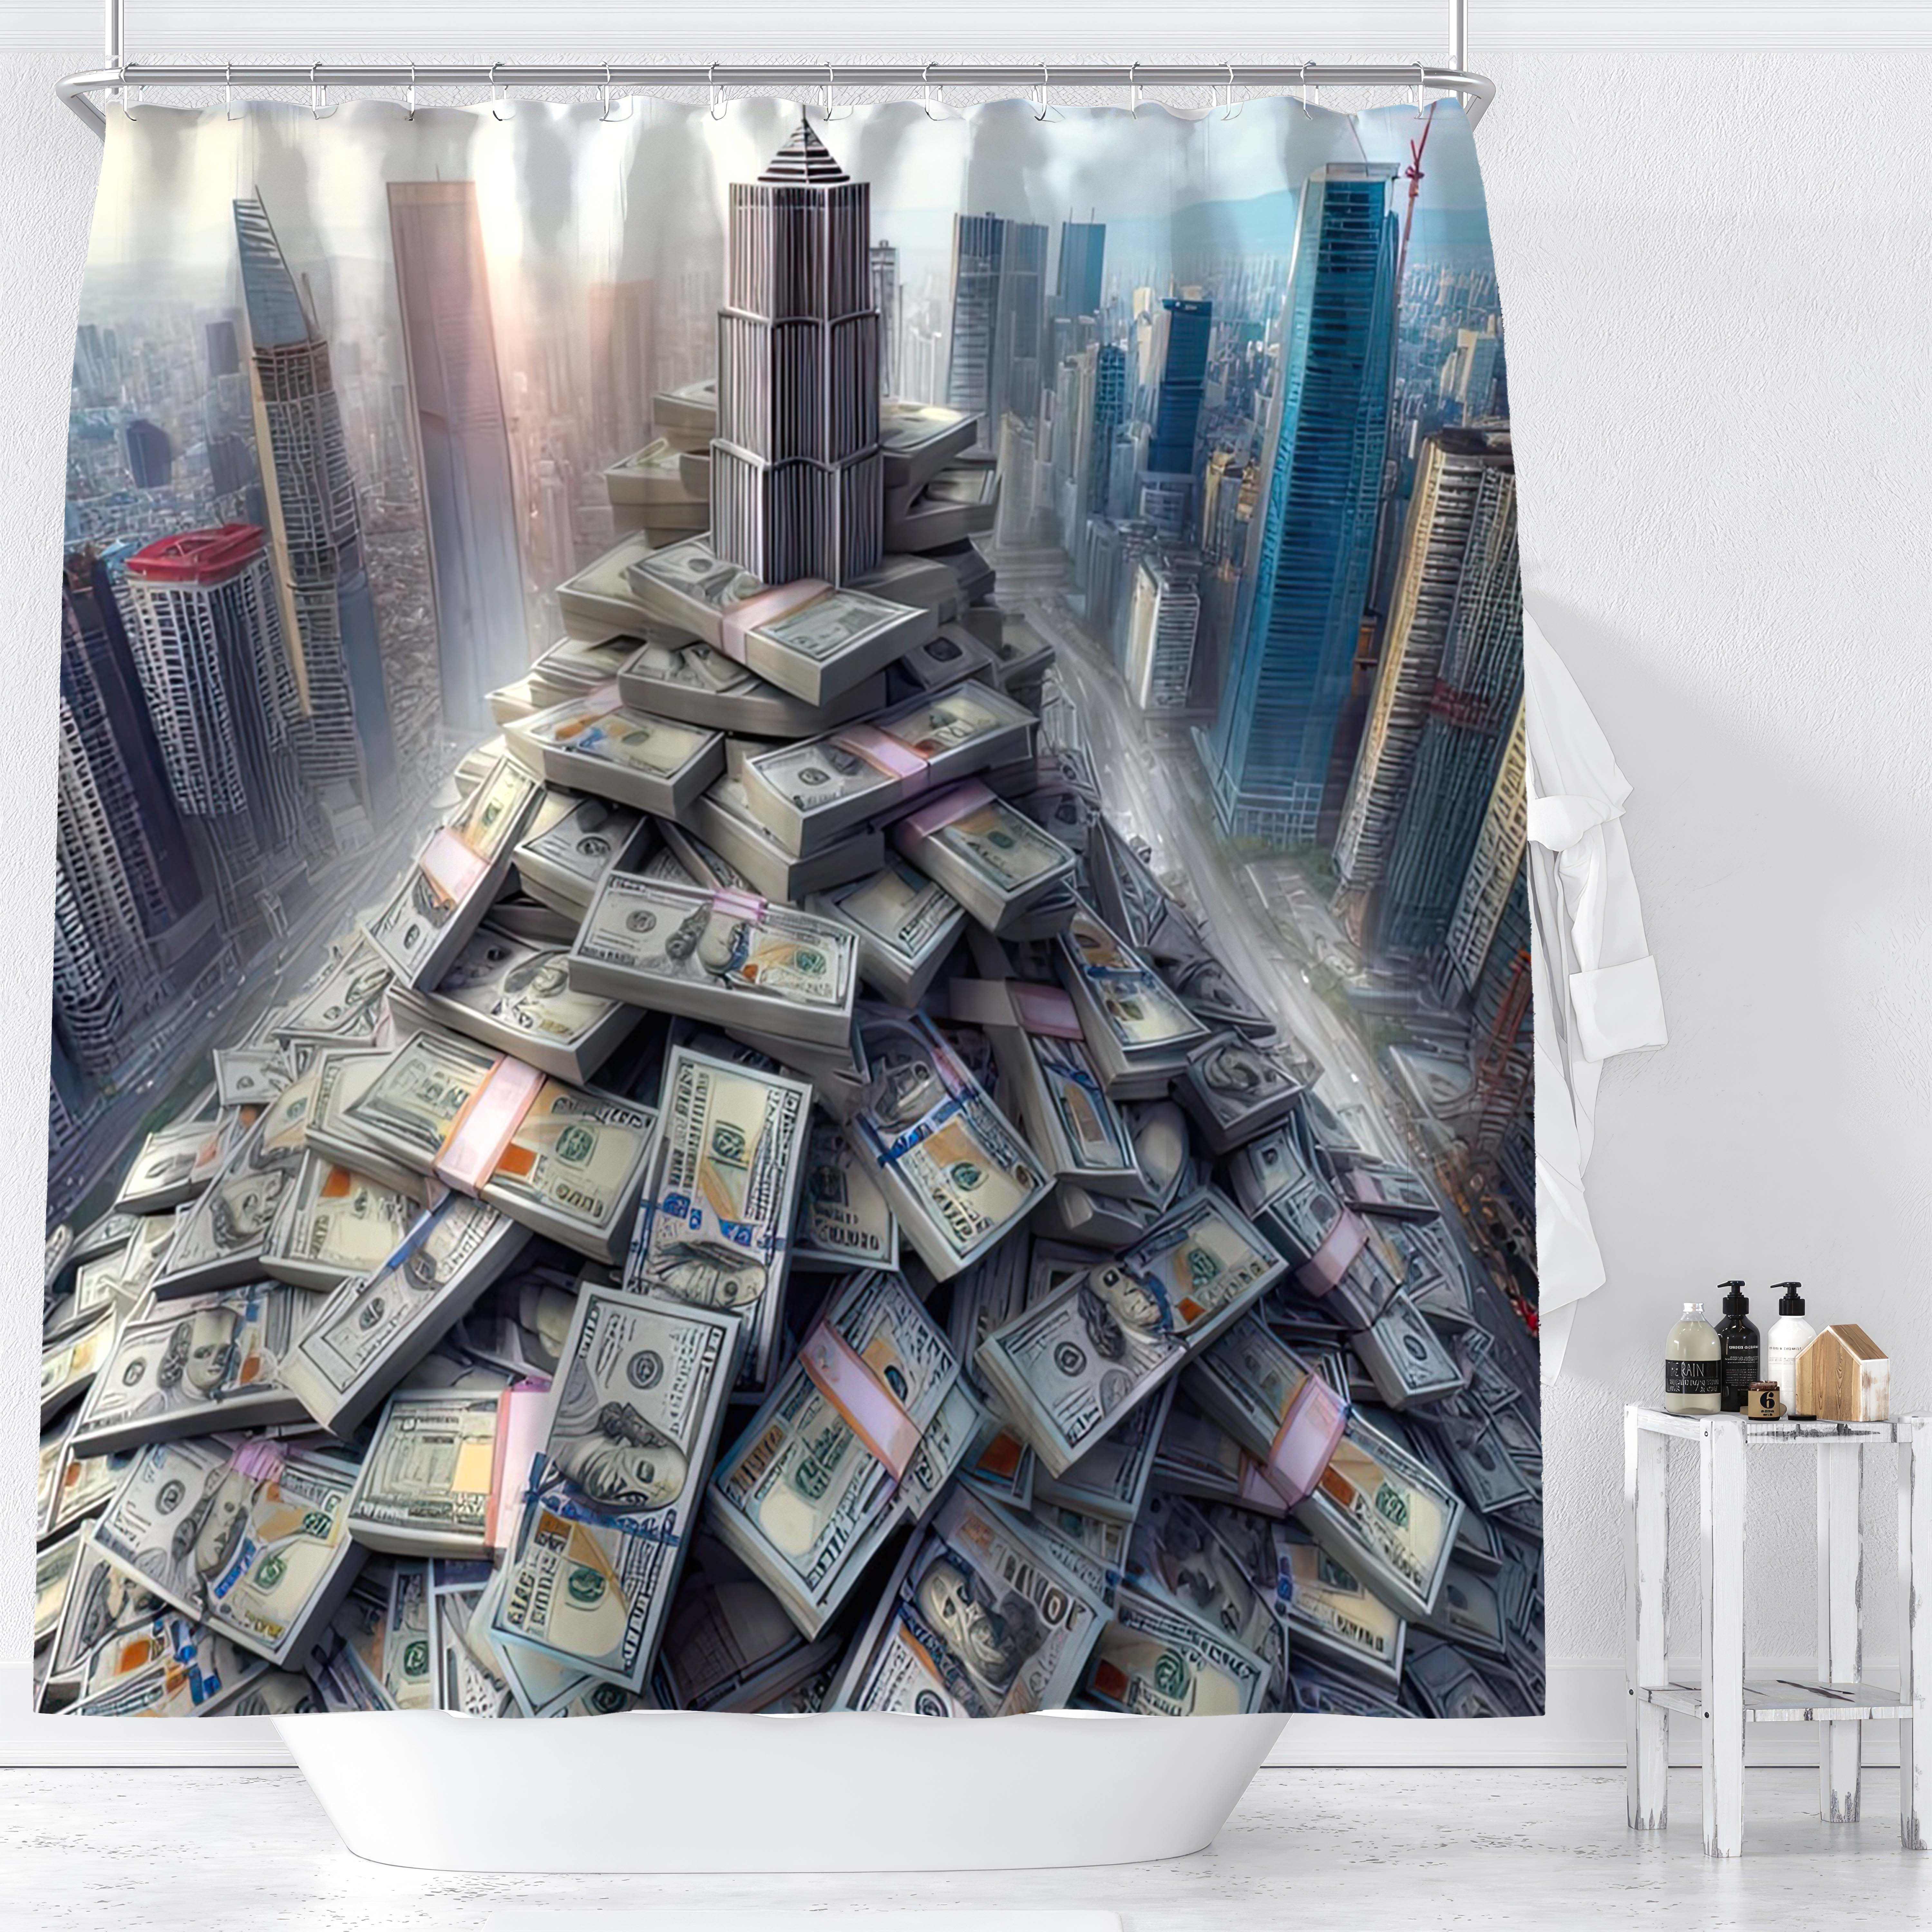 

1pc, 3d City Skyscrapers & Cash Pile Digital Print Shower Curtain, Waterproof Bathroom Decor With Hooks